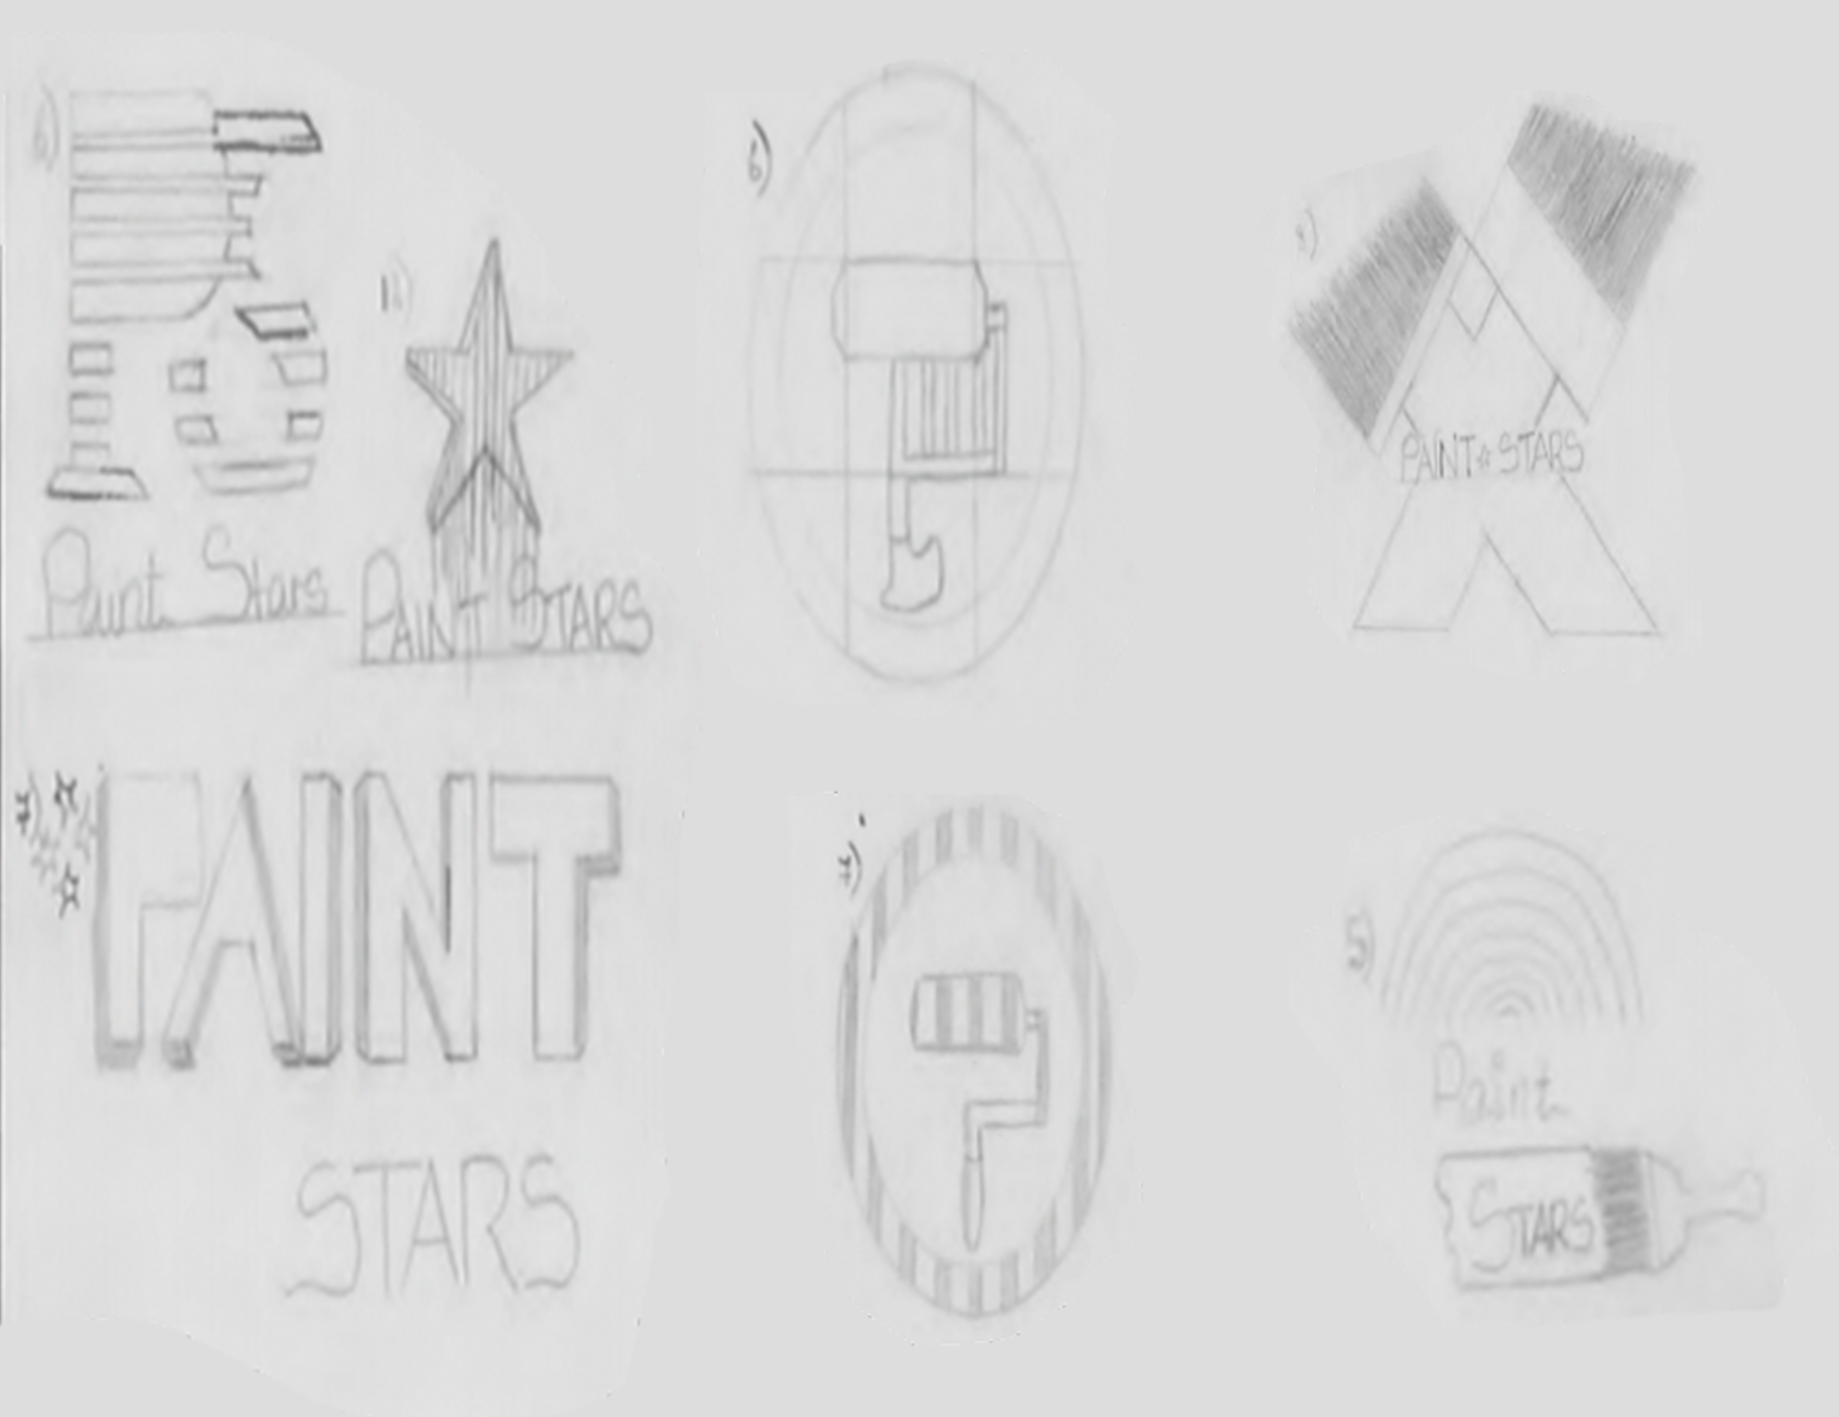 handdrawn sketches of logo